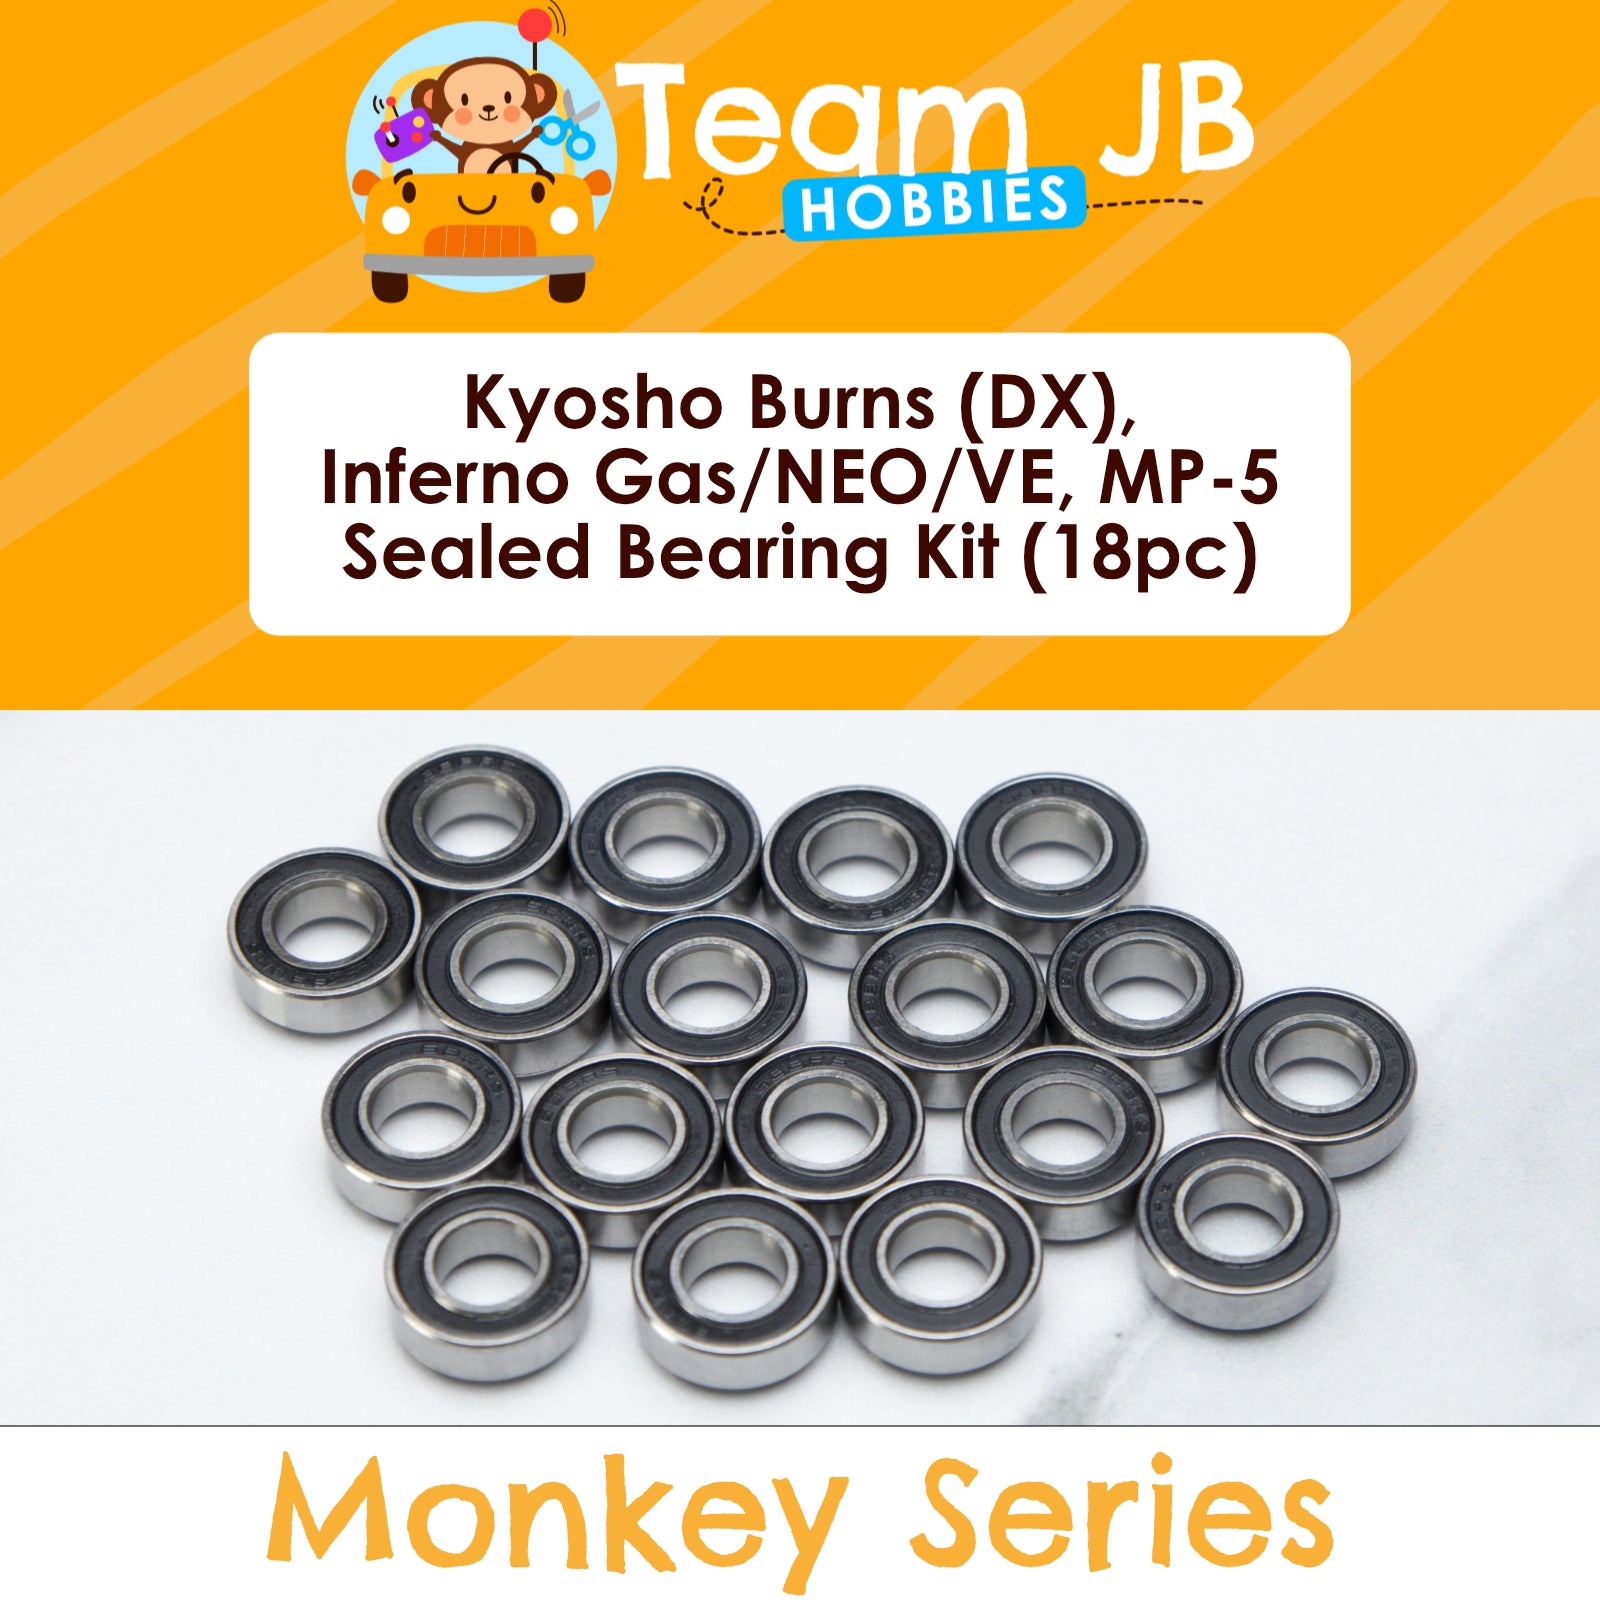 Kyosho Burns, Burns DX, Inferno Gas/NEO 3.0 VE/VE, MP-5 - Sealed Bearing Kit